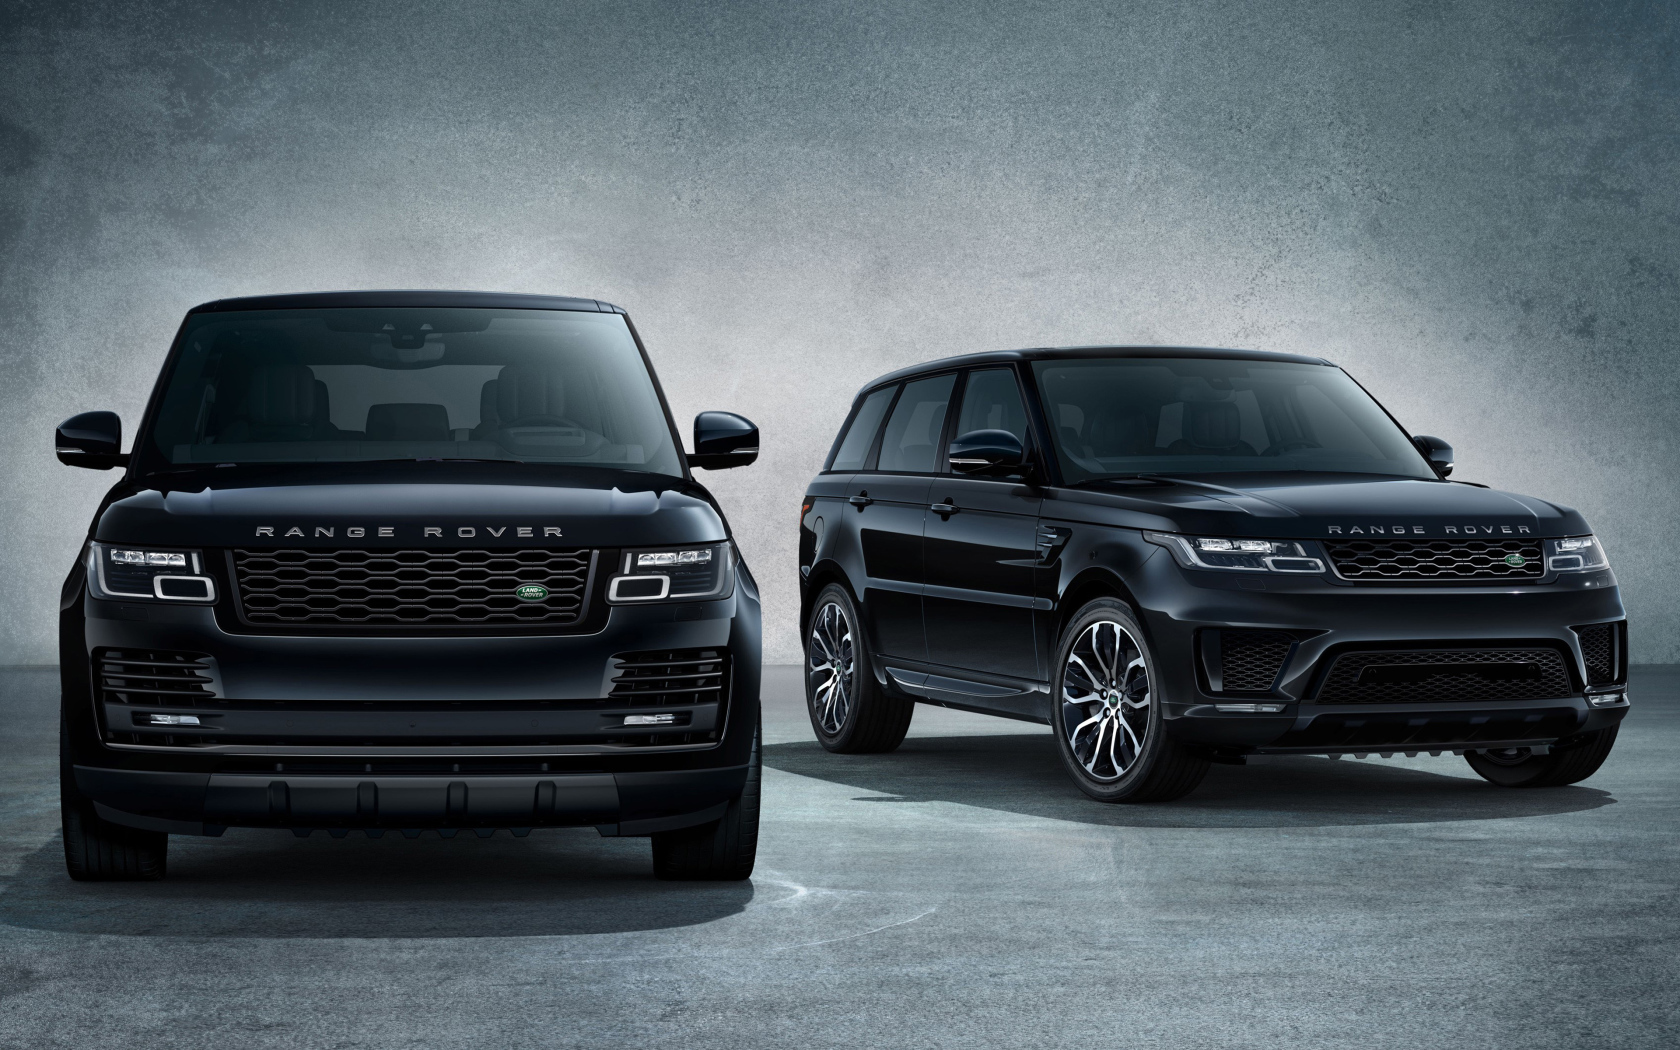 Black stylish SUV Range Rover Sport, 2018